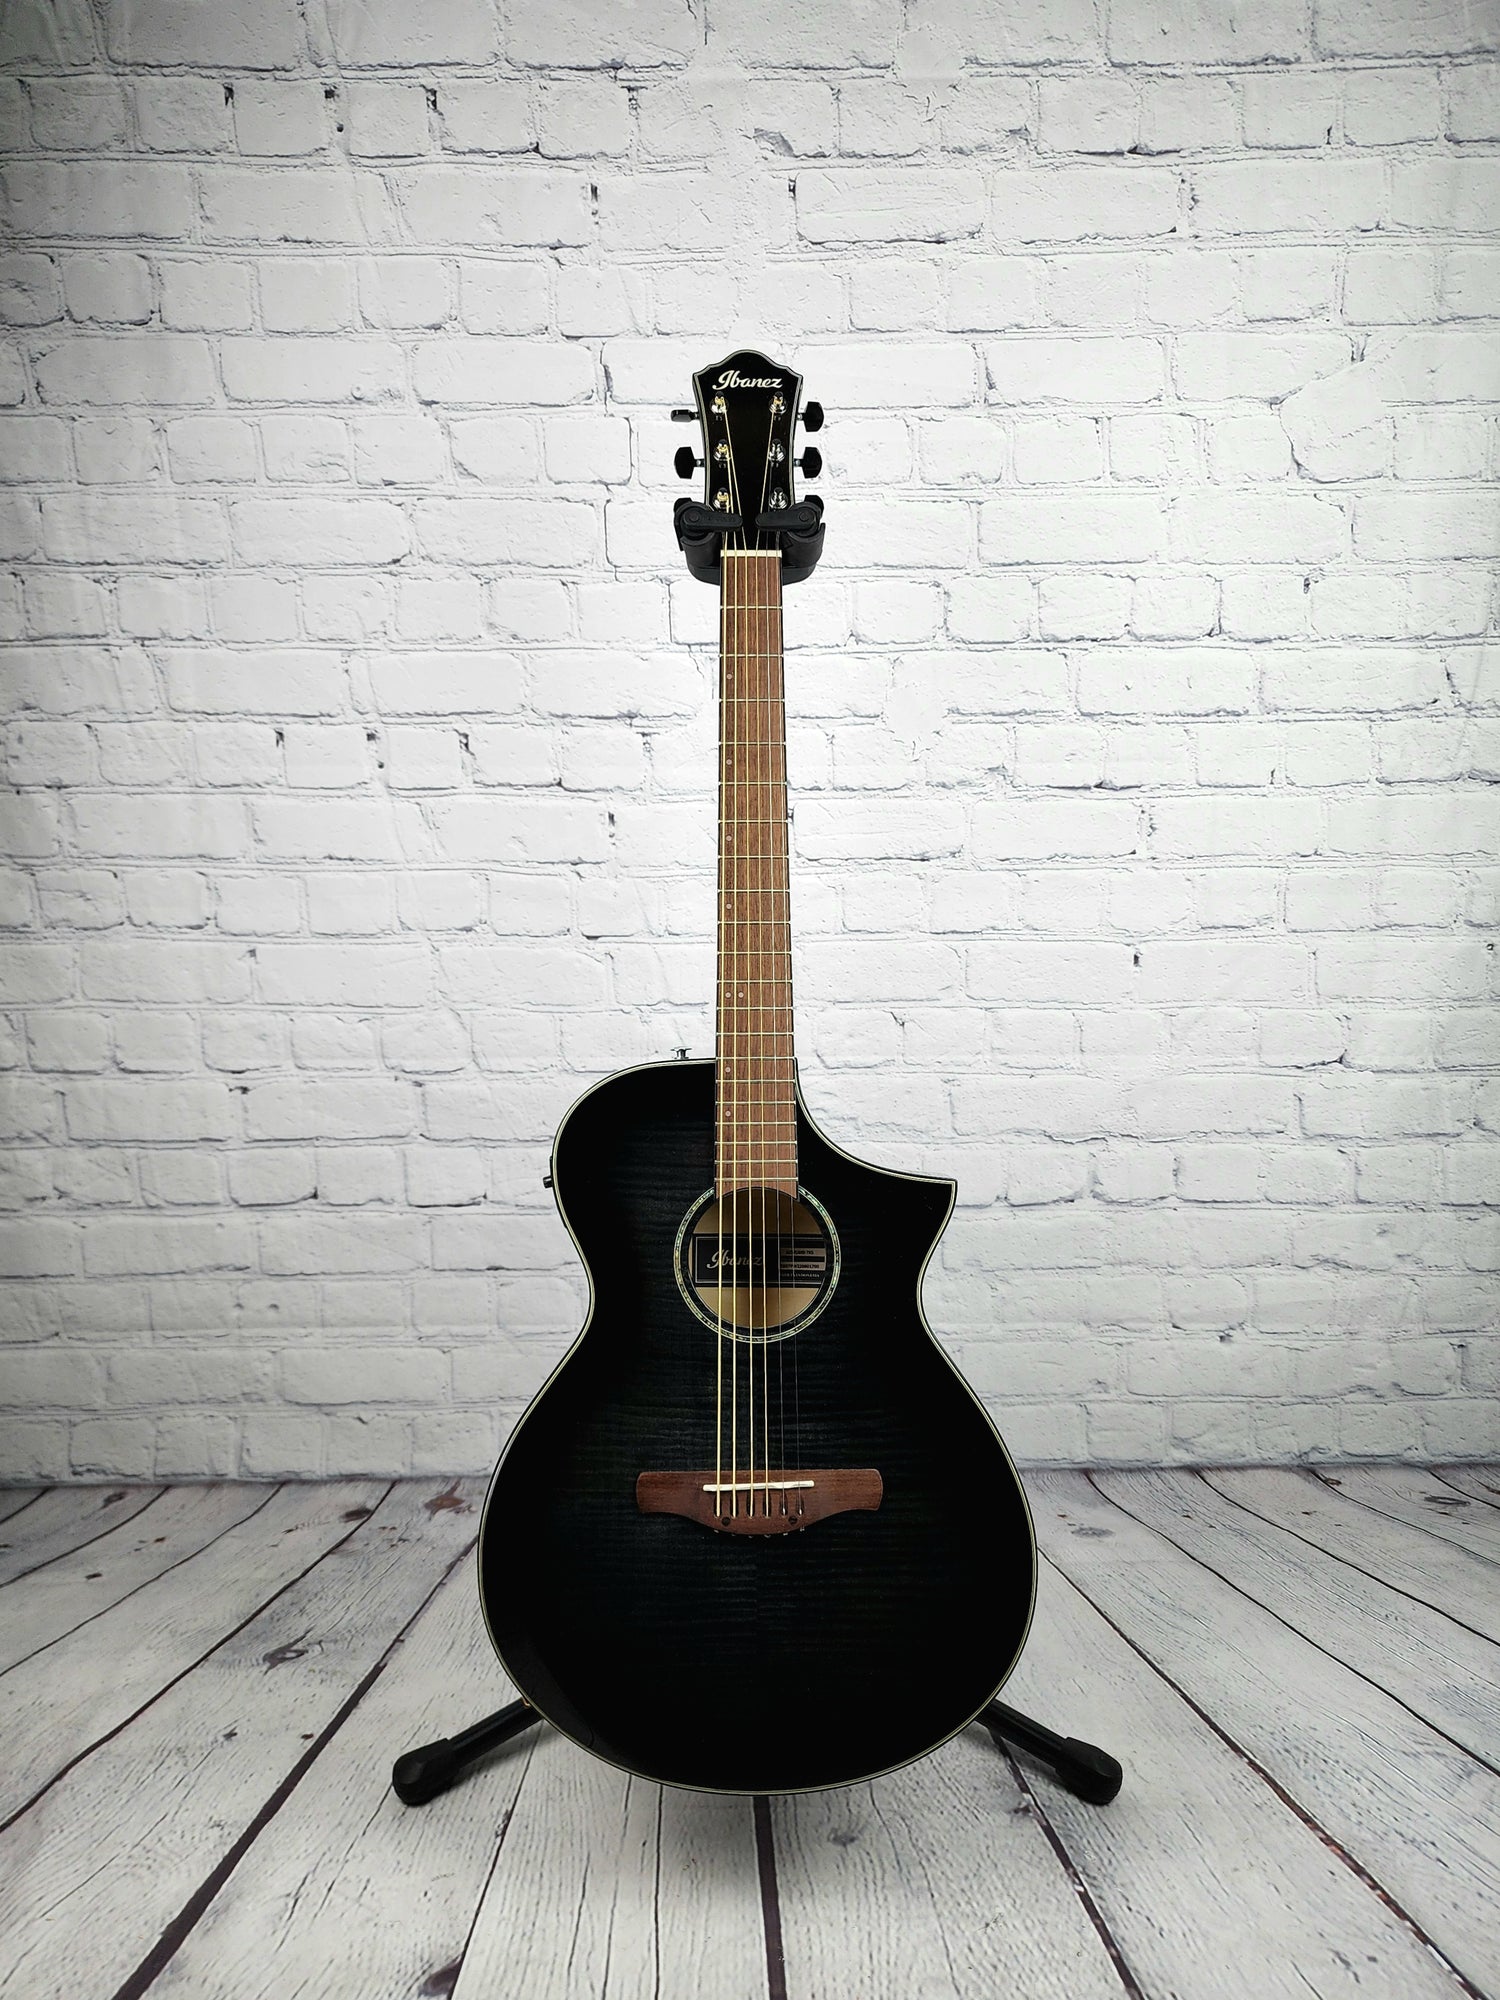 Ibanez Acoustic Guitars